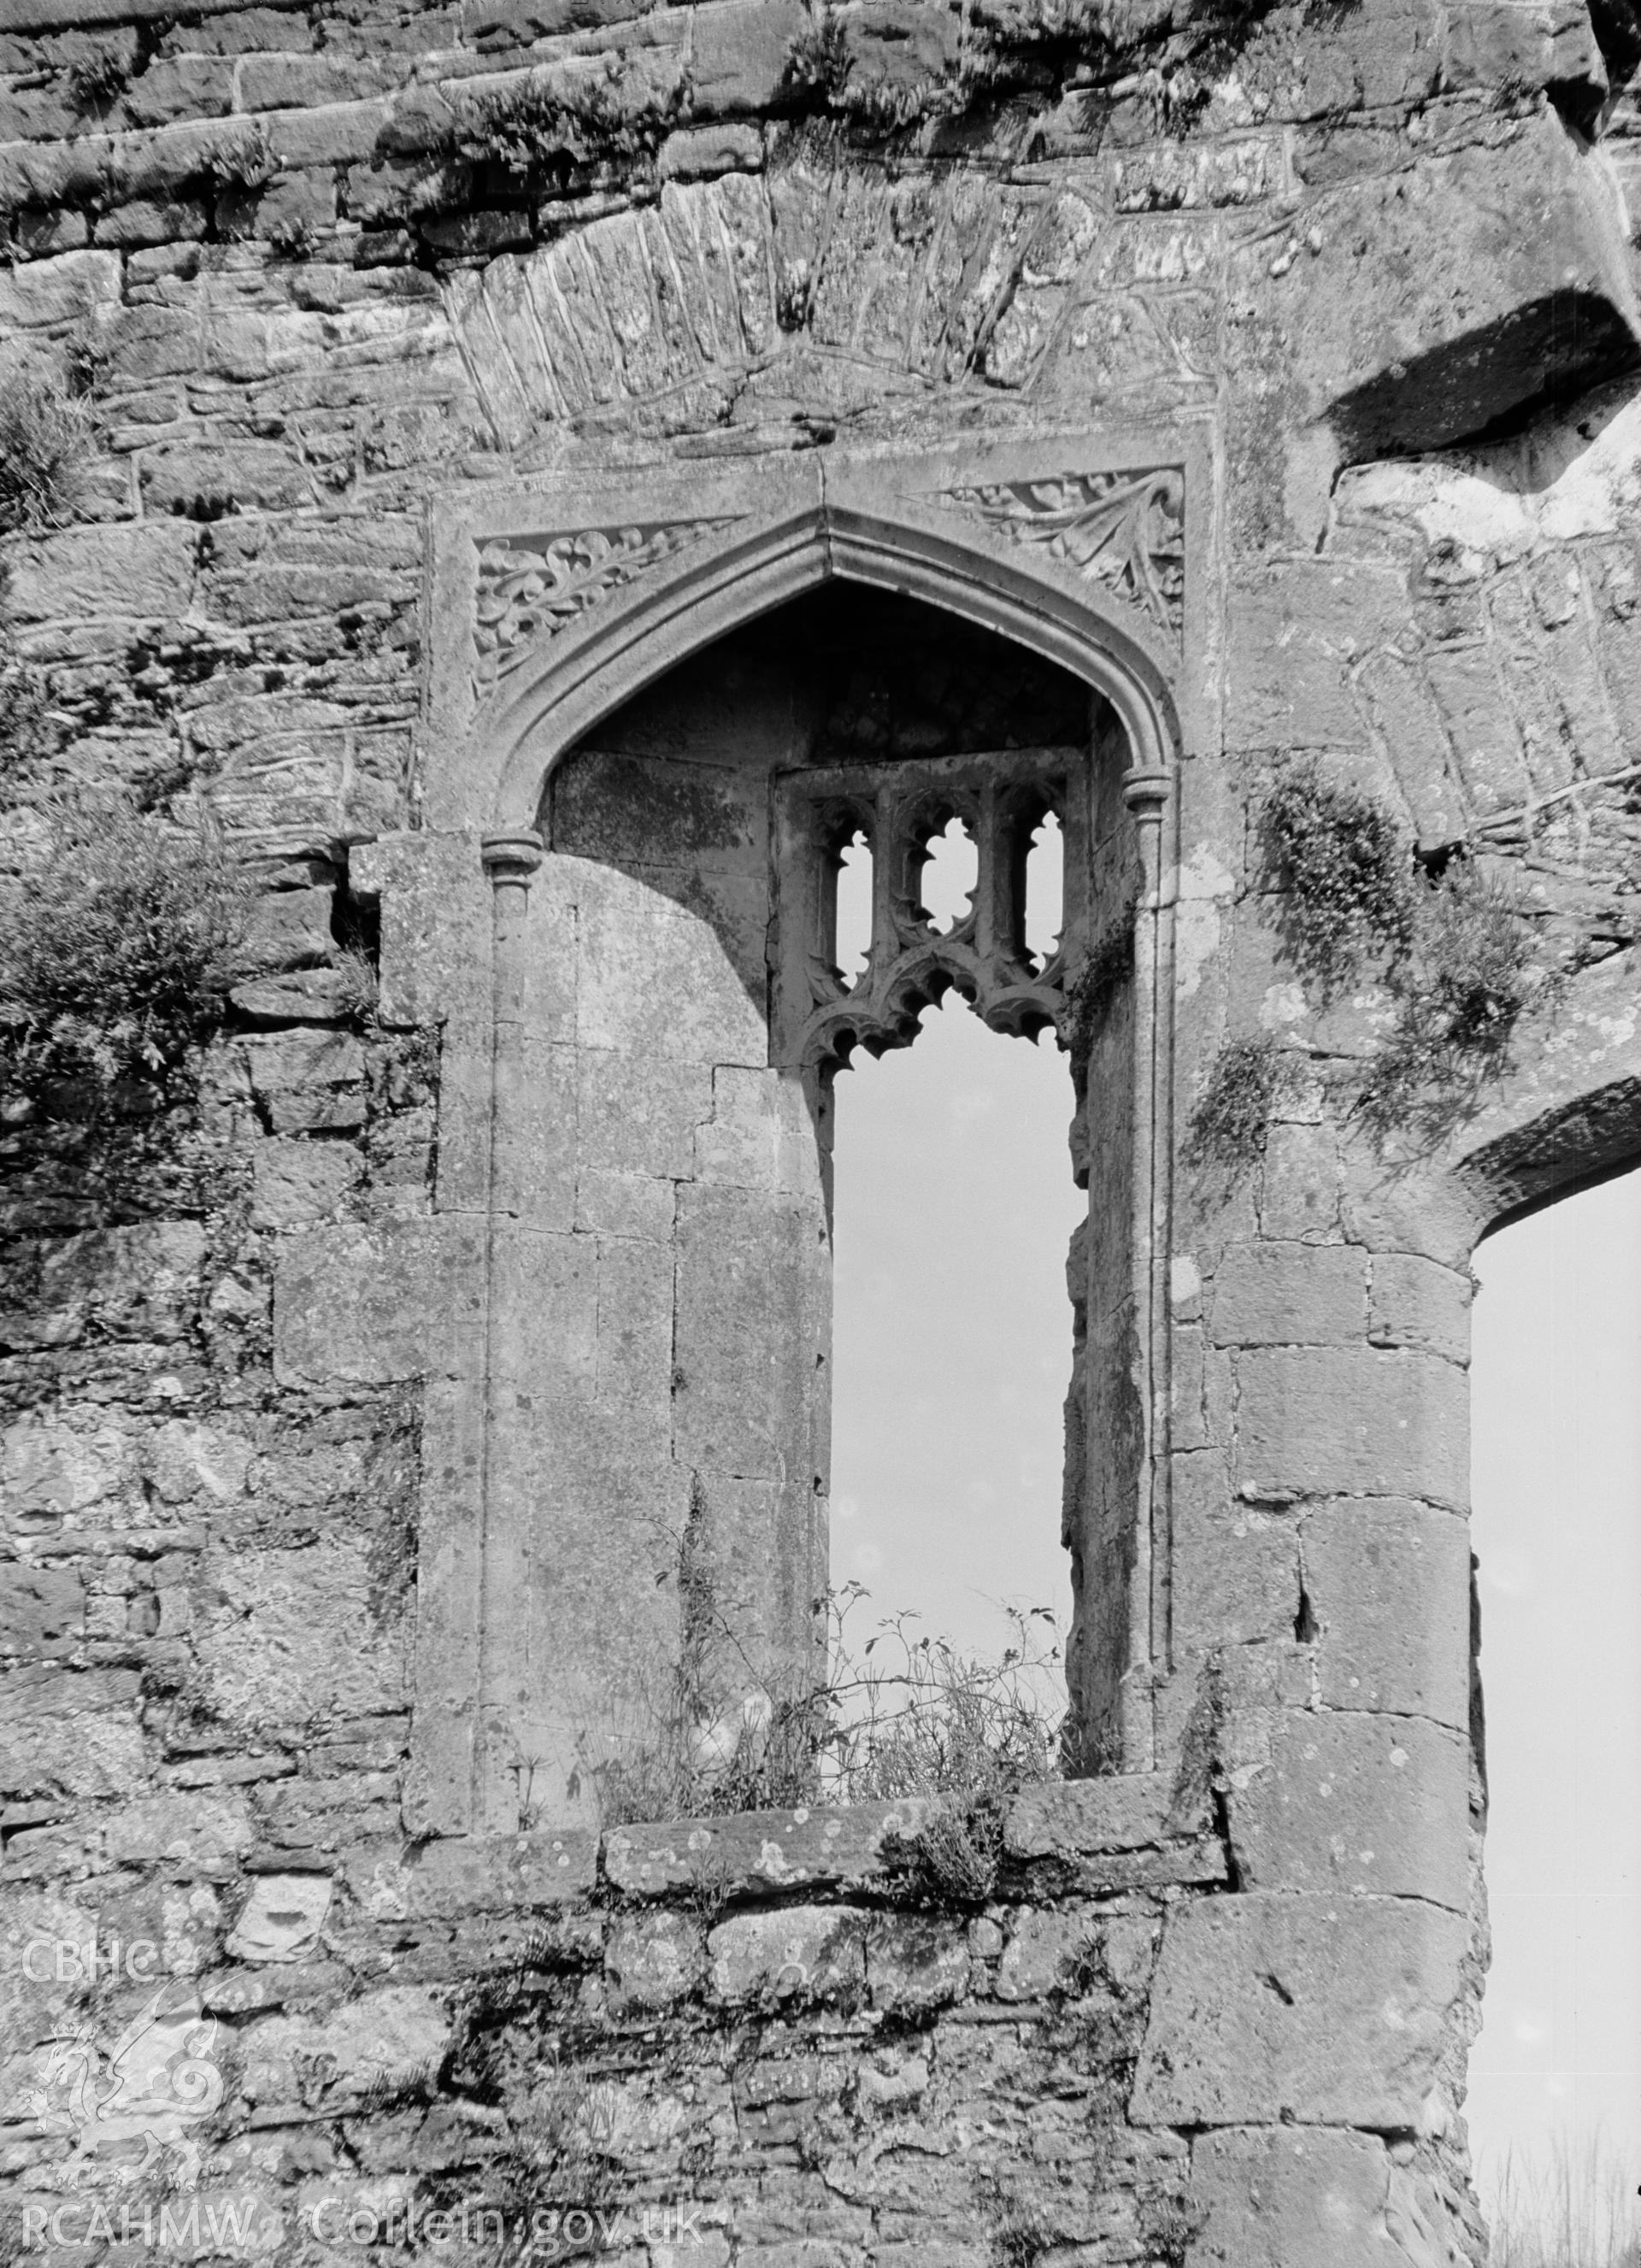 View of window at Raglan Castle.